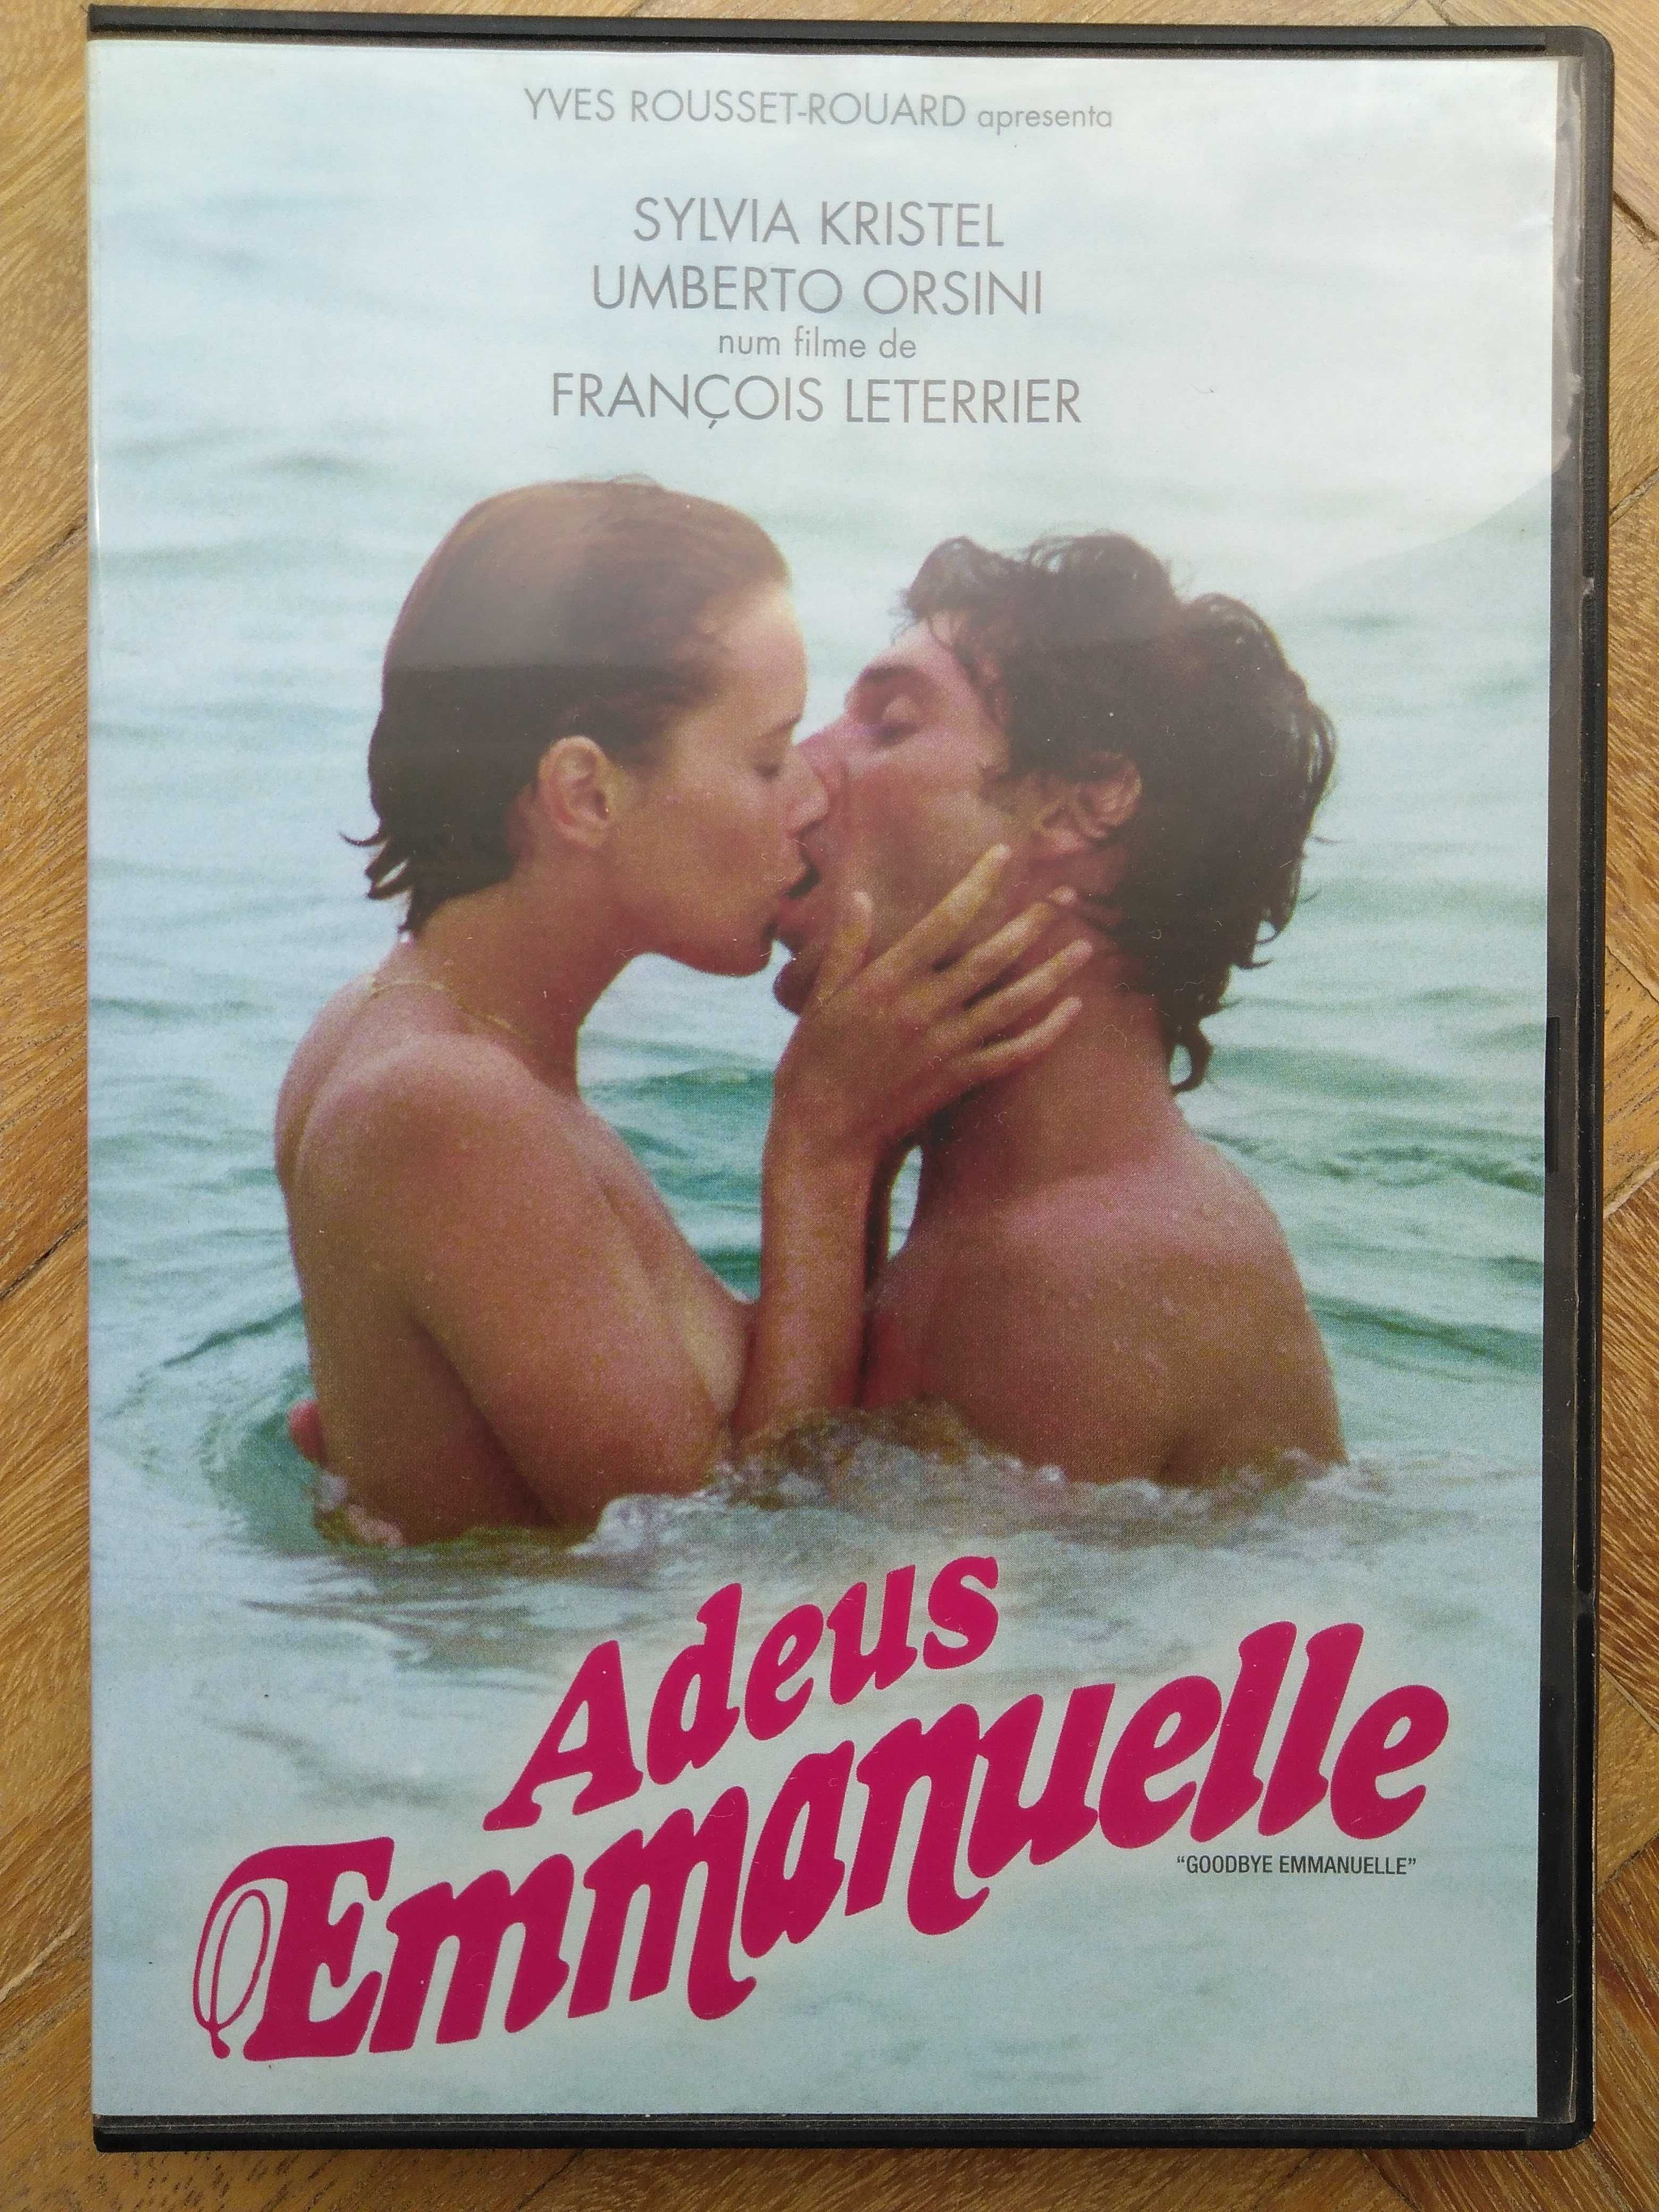 dvd: François Leterrier "Adeus Emmanuelle"